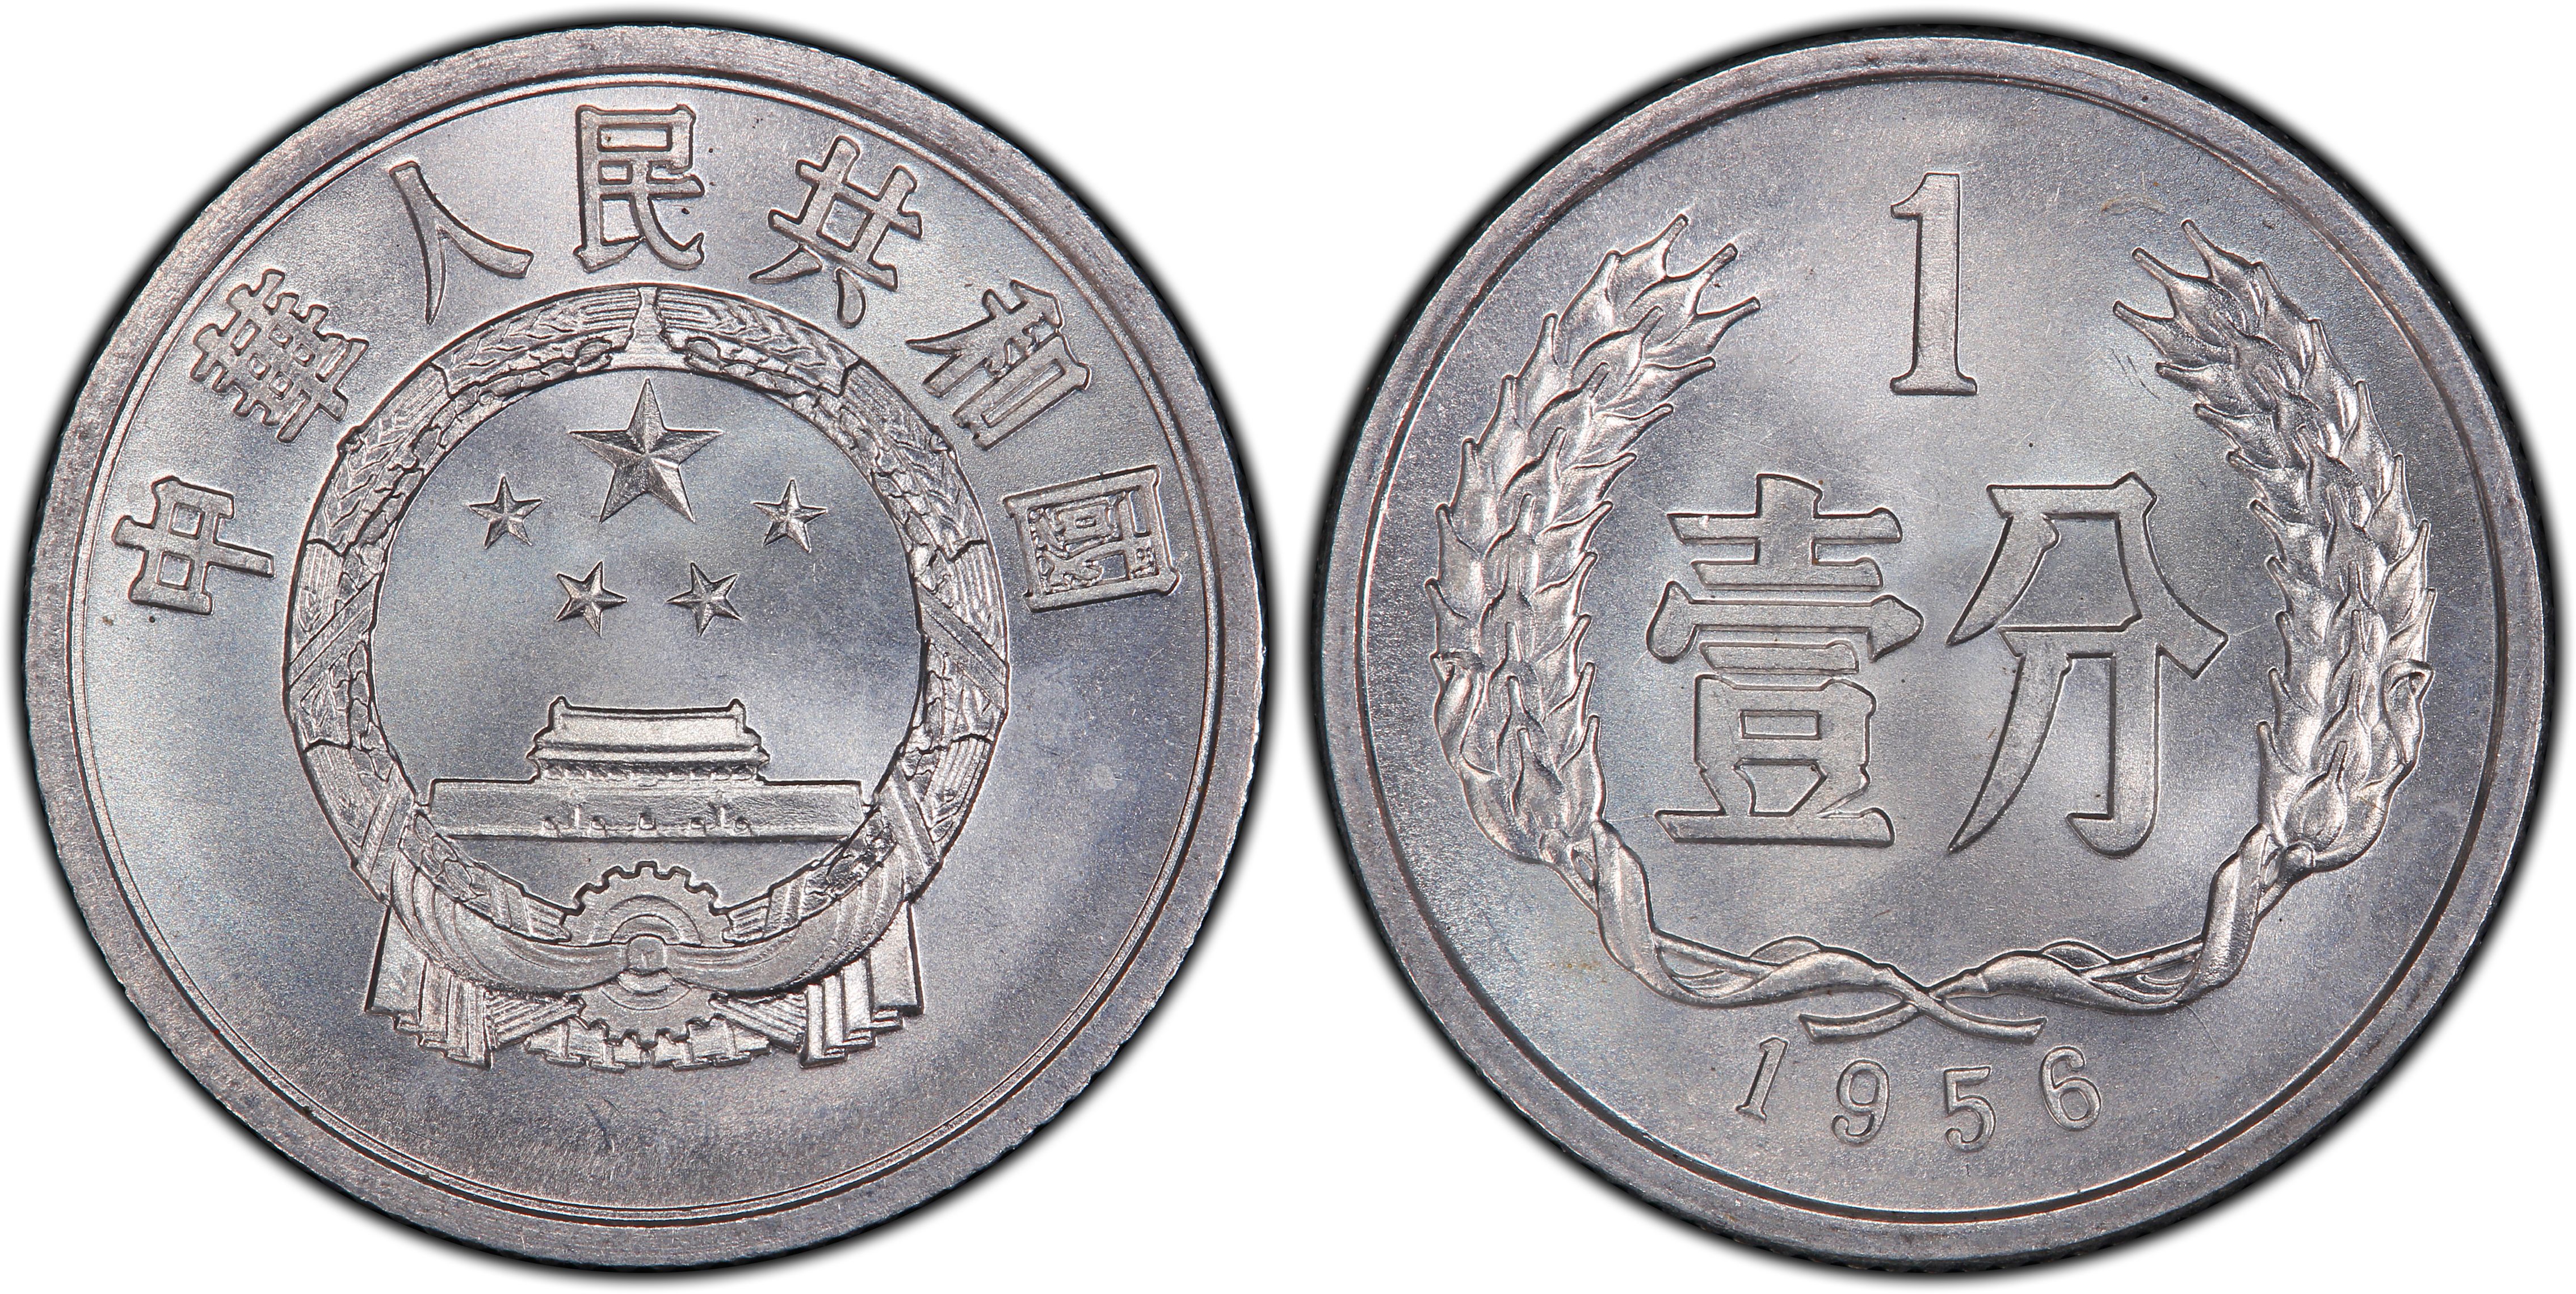 valueview 中国 中华人民共和国 普通流通币 1 分 (铝) 1956 fen sun